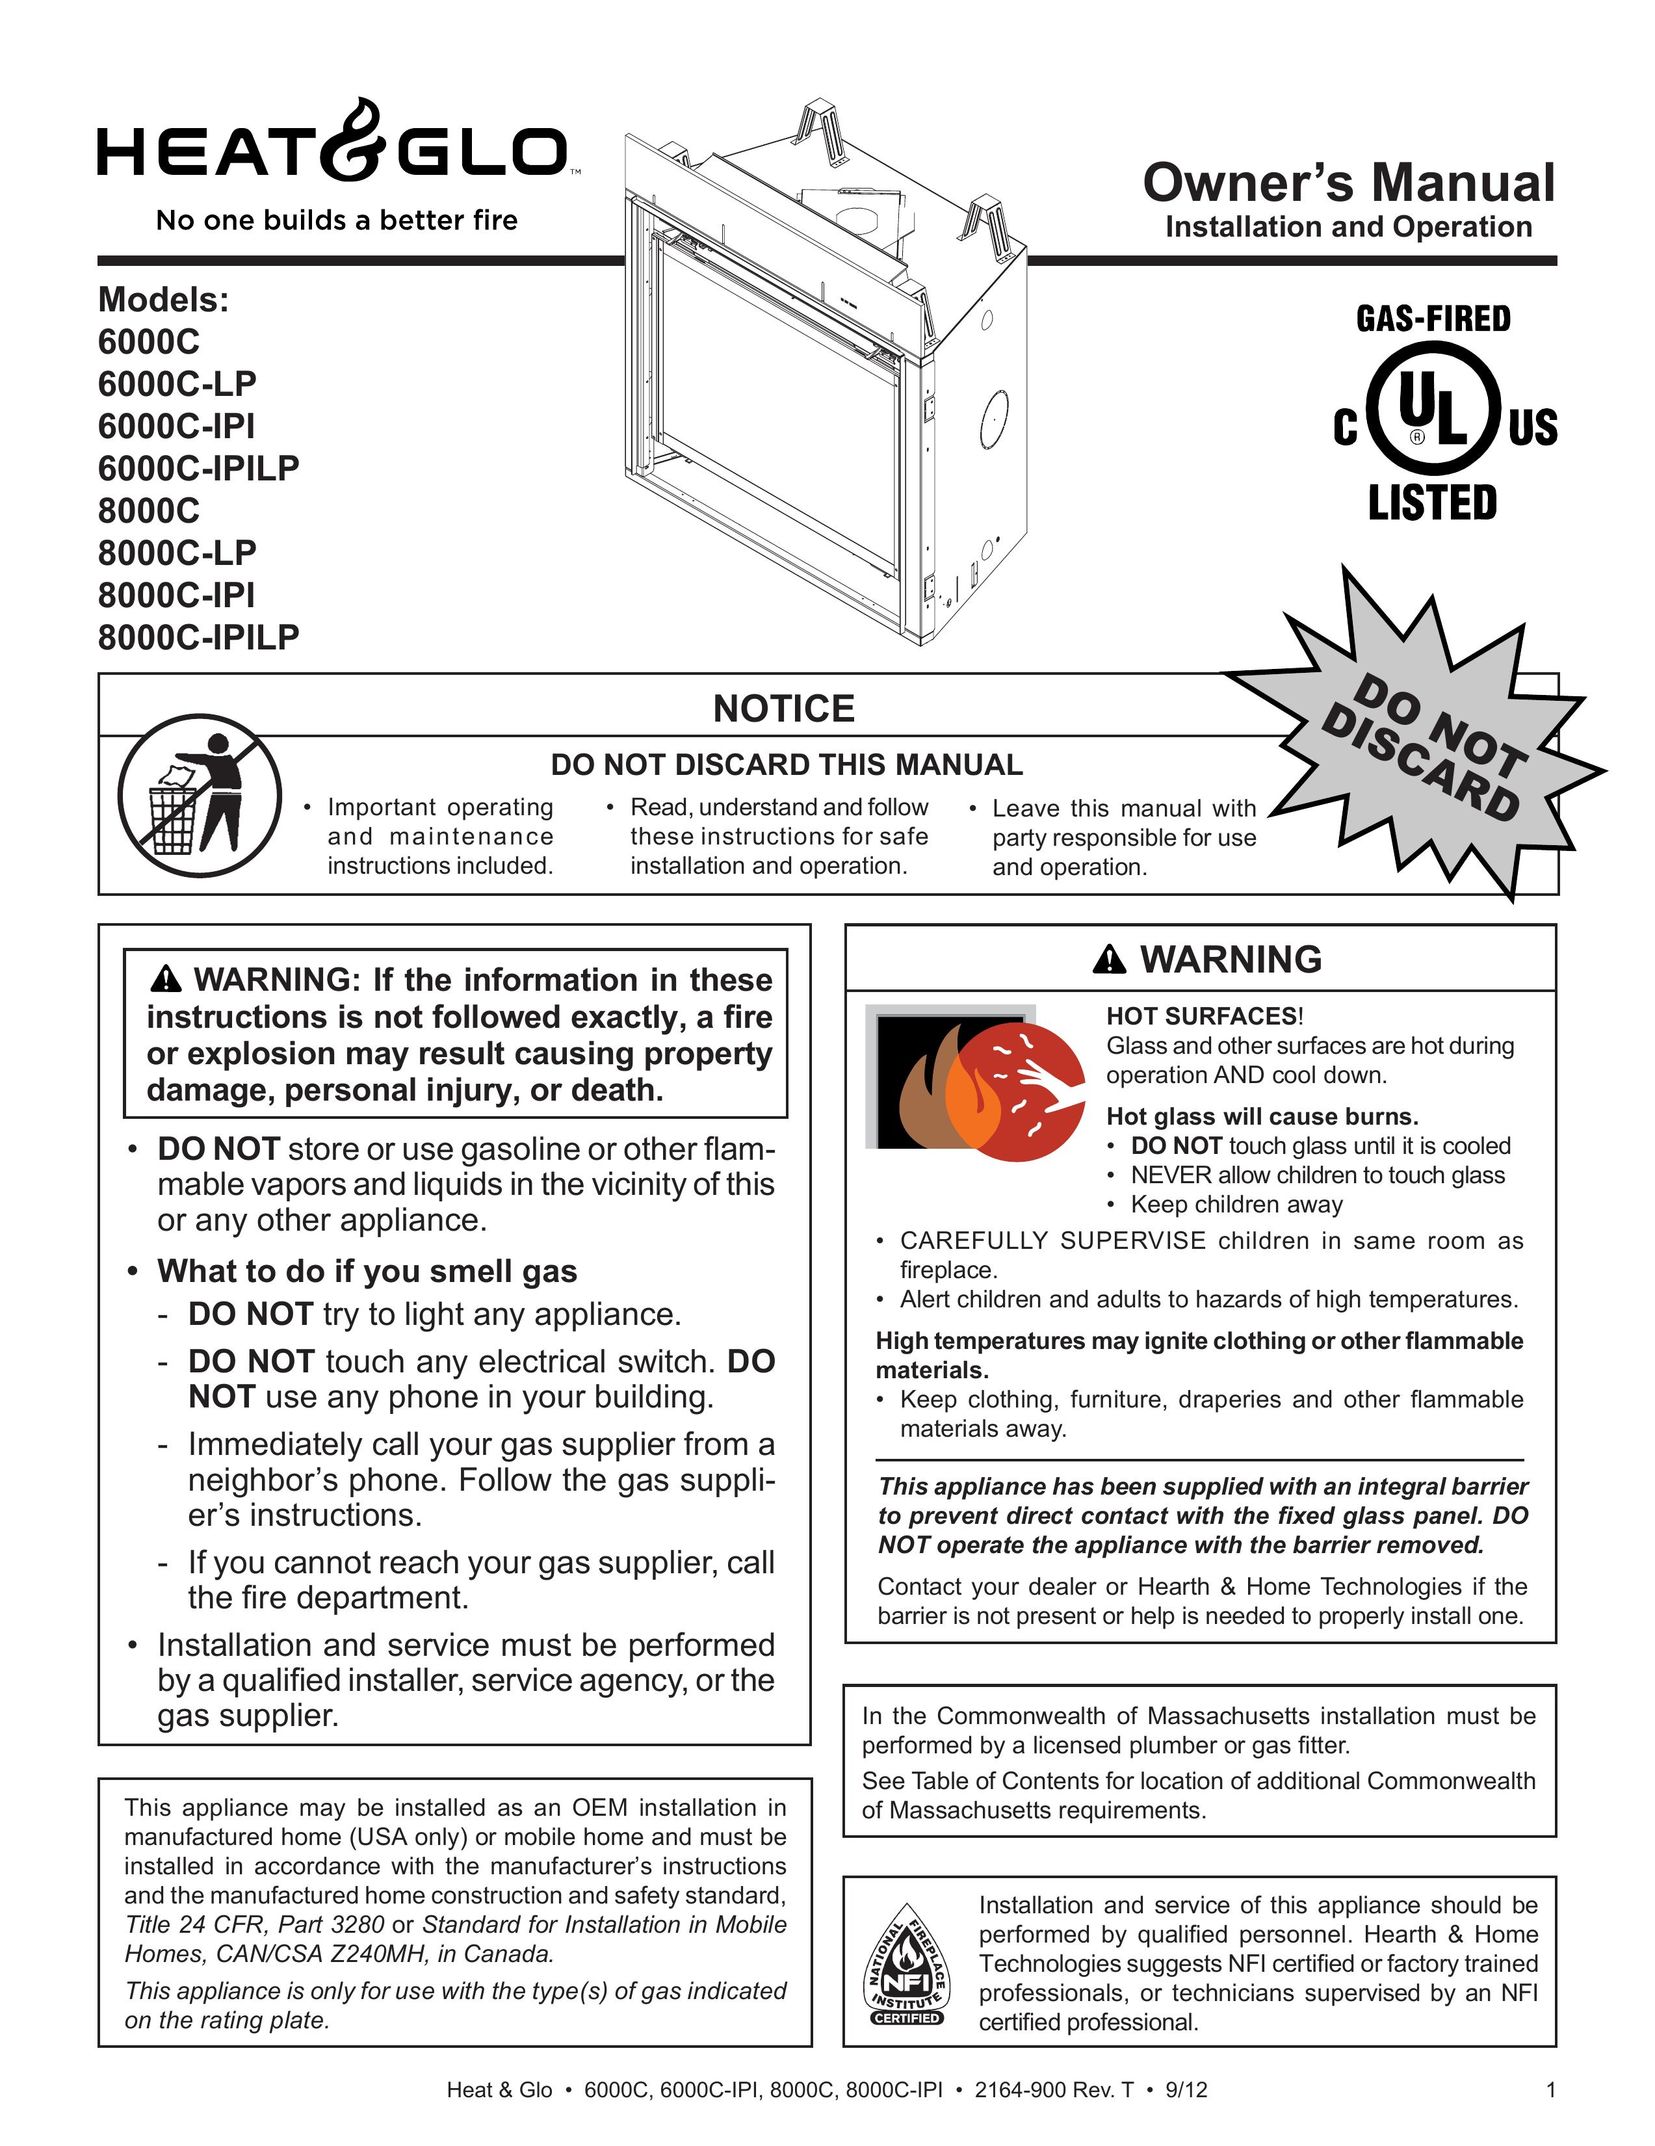 Heat & Glo LifeStyle 6000C Indoor Fireplace User Manual